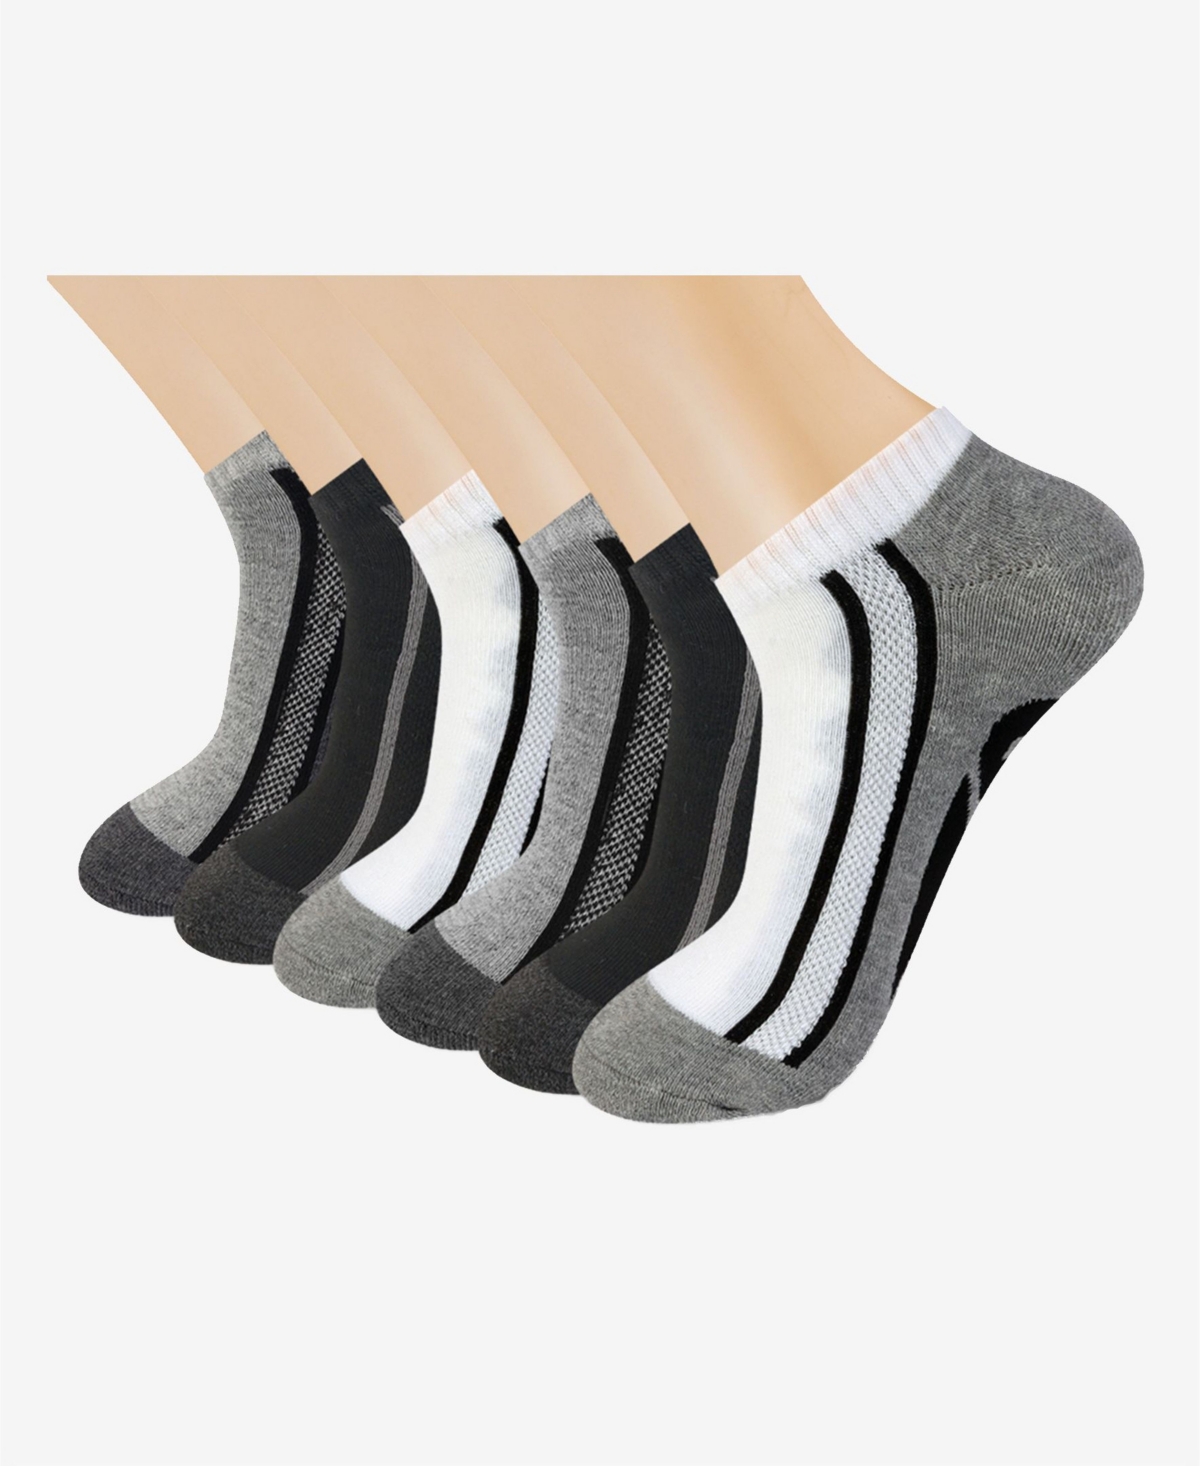 Caterpillar Men's Half Cushion Socks, Pack of 6